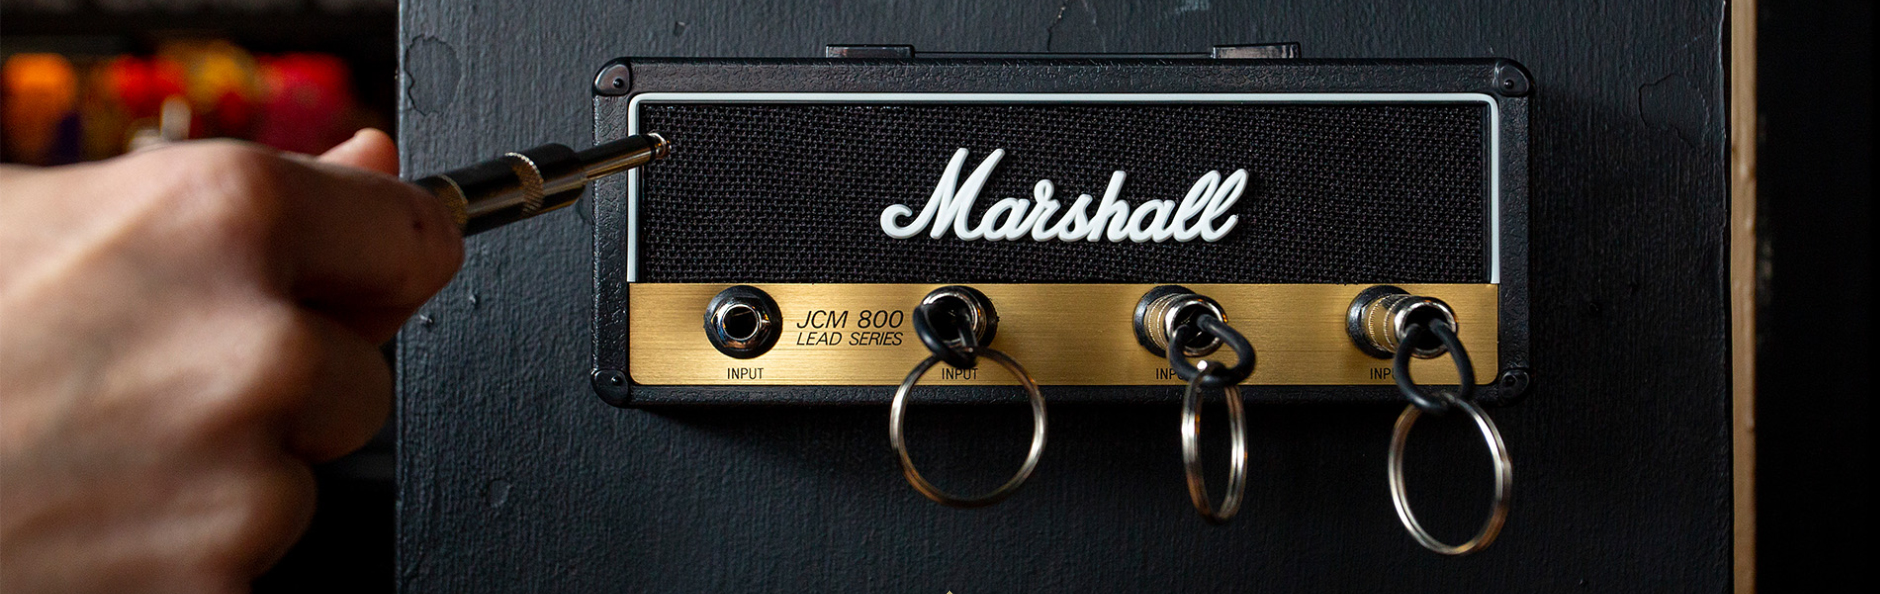 Marshall Key ACCS-10336 Silver Jack Rack : Musical  